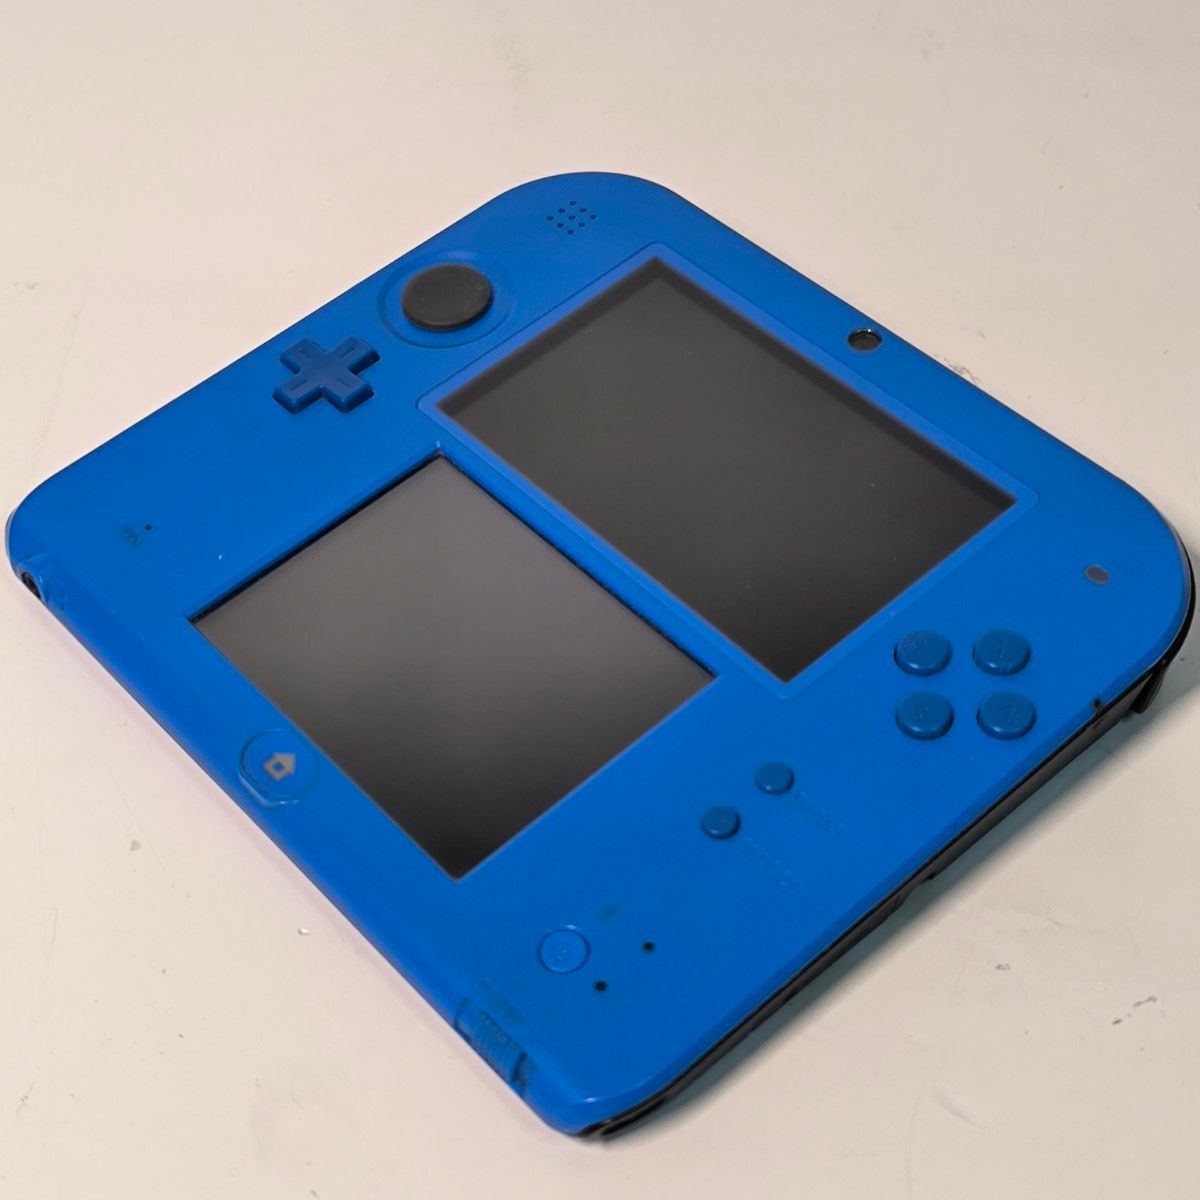 Nintendo 2DS ブルー  ニンテンドー2DS 動作品 初期化済み